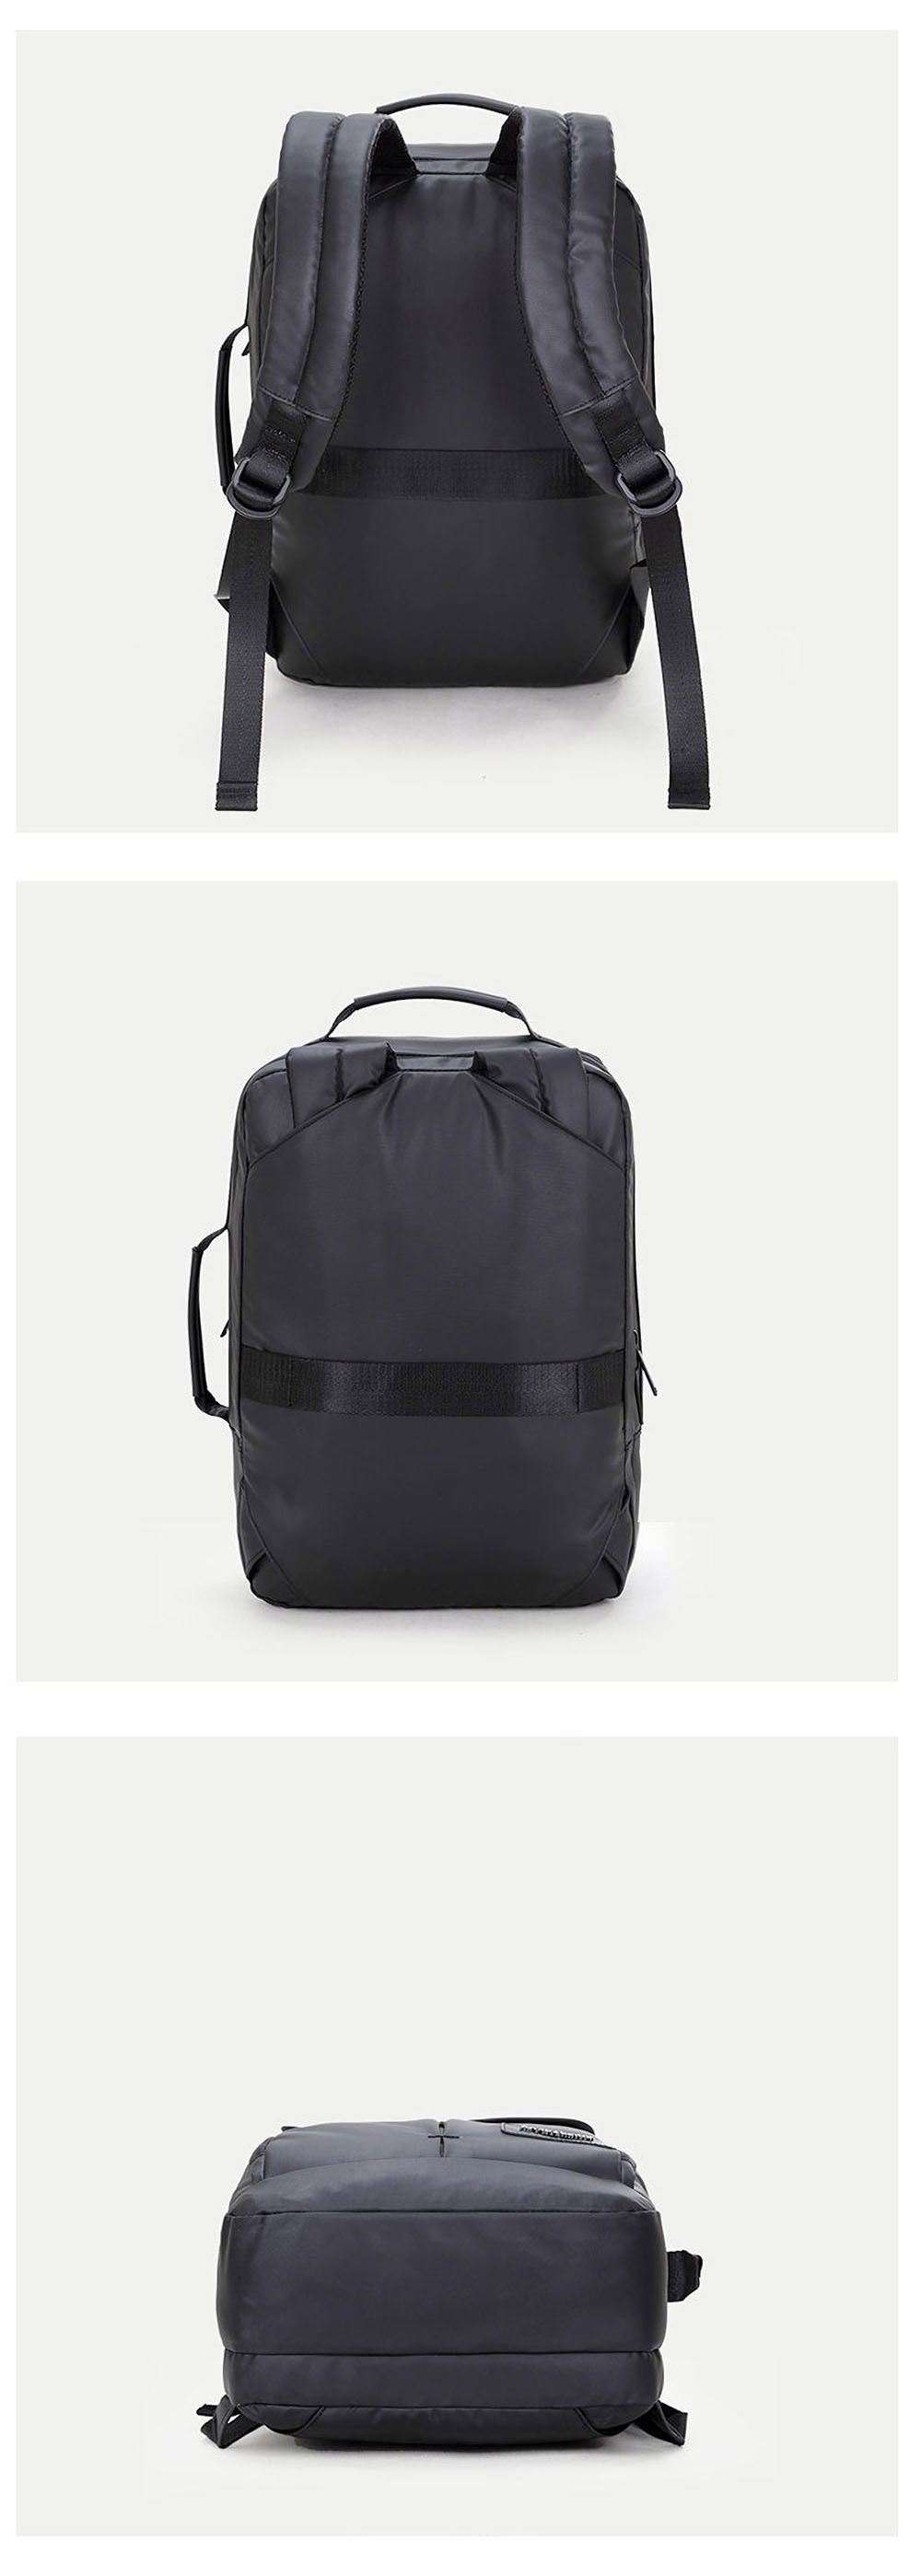 16-Inch-Laptop-Backpack-Mens-Womens-Shoulder-Bag-Business-Laptop-Bag-Large-Capacity-Casual-Travel-Ba-1522938